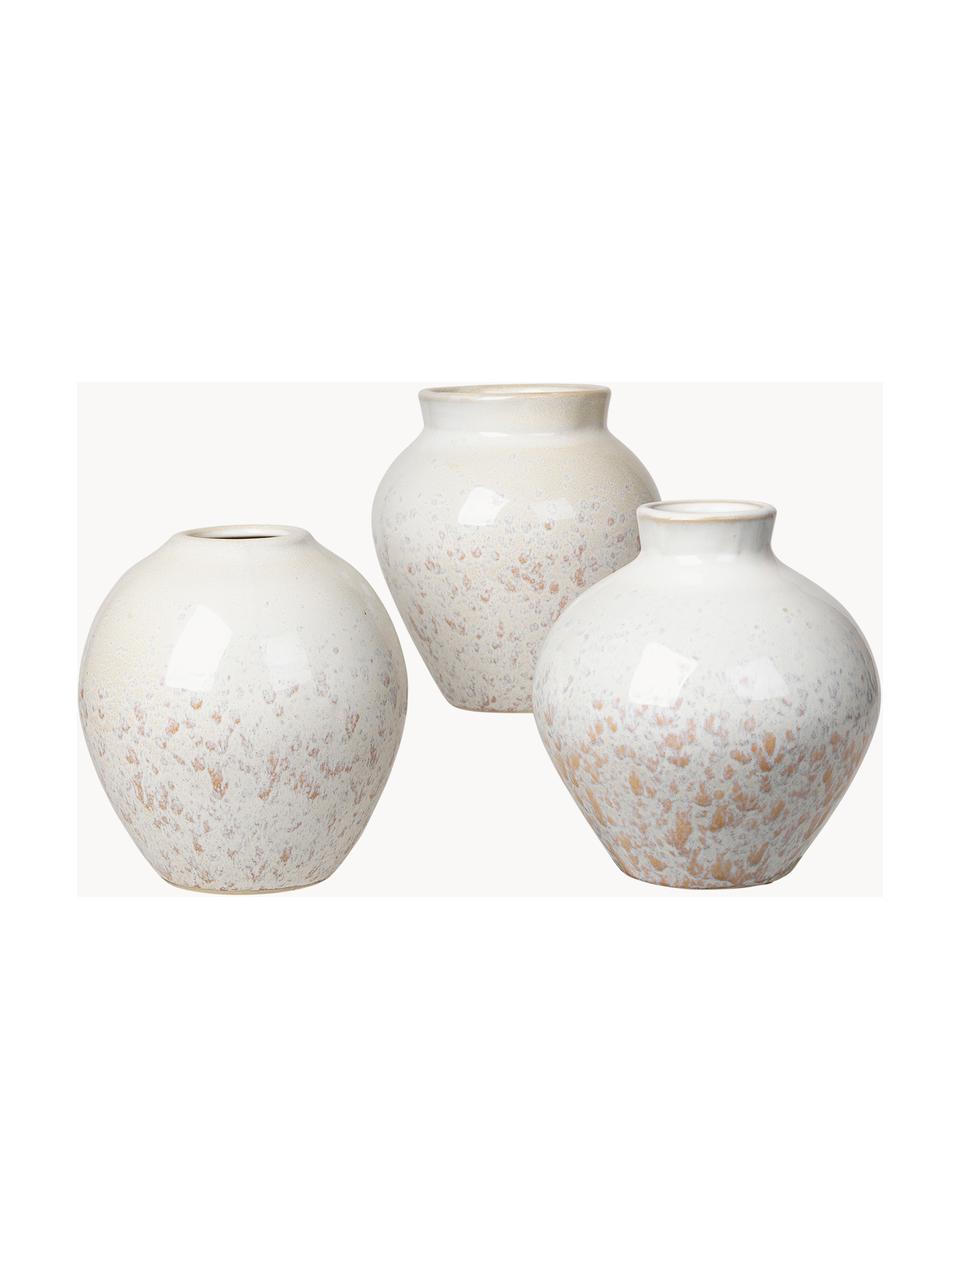 Set de jarrones de cerámica Ingrid, 3 pzas., Cerámica, Blanco, tonos beige, Ø 14 x Al 15 cm